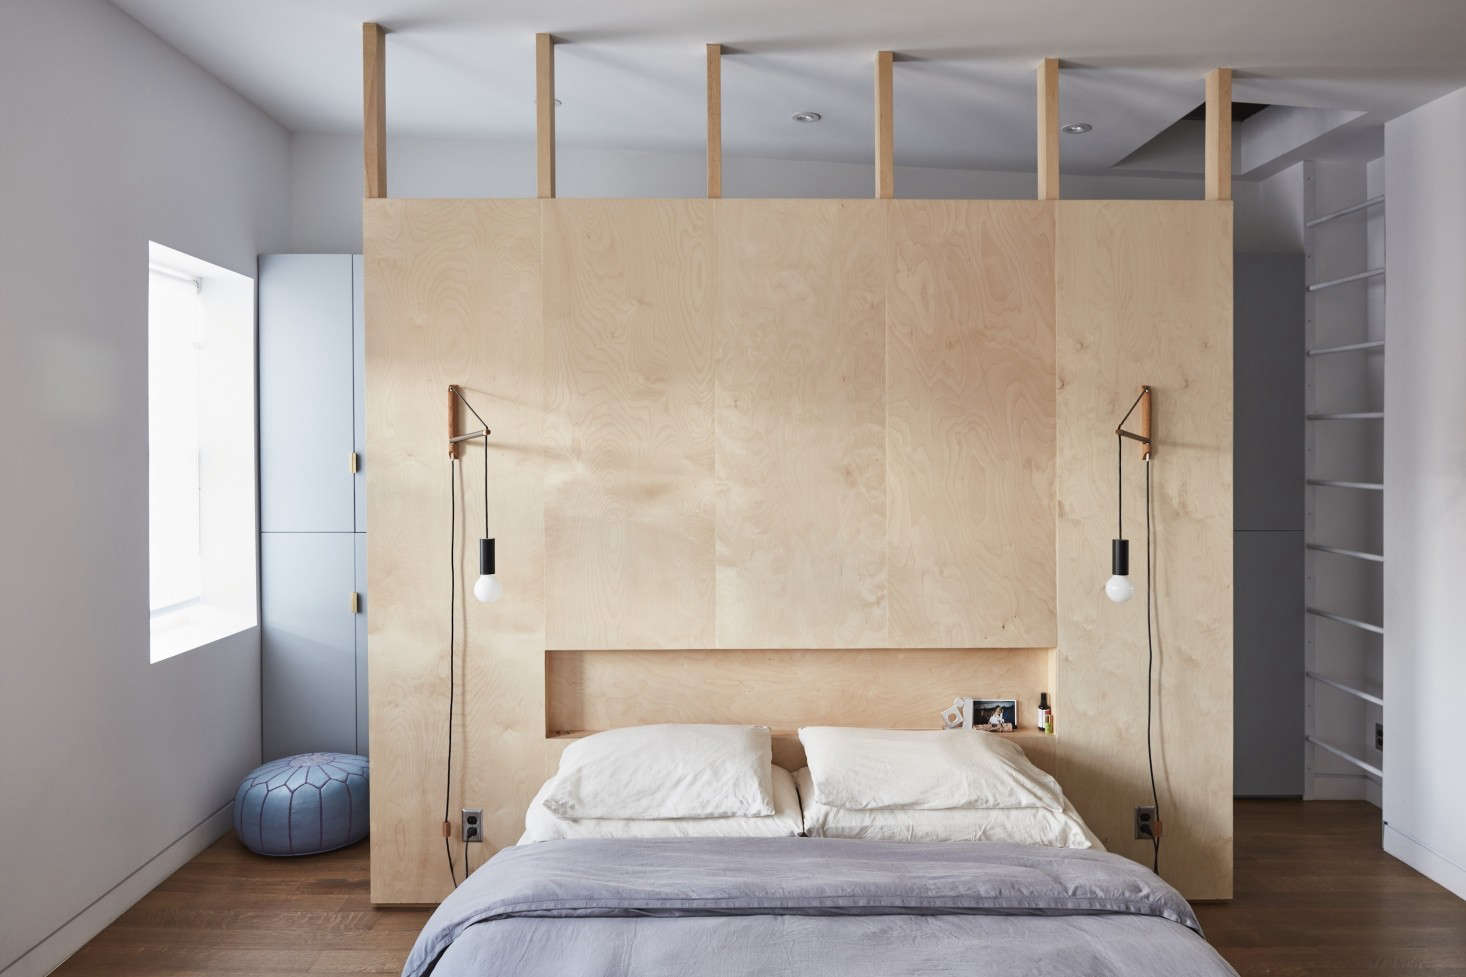 Modern bedroom built-in ideas